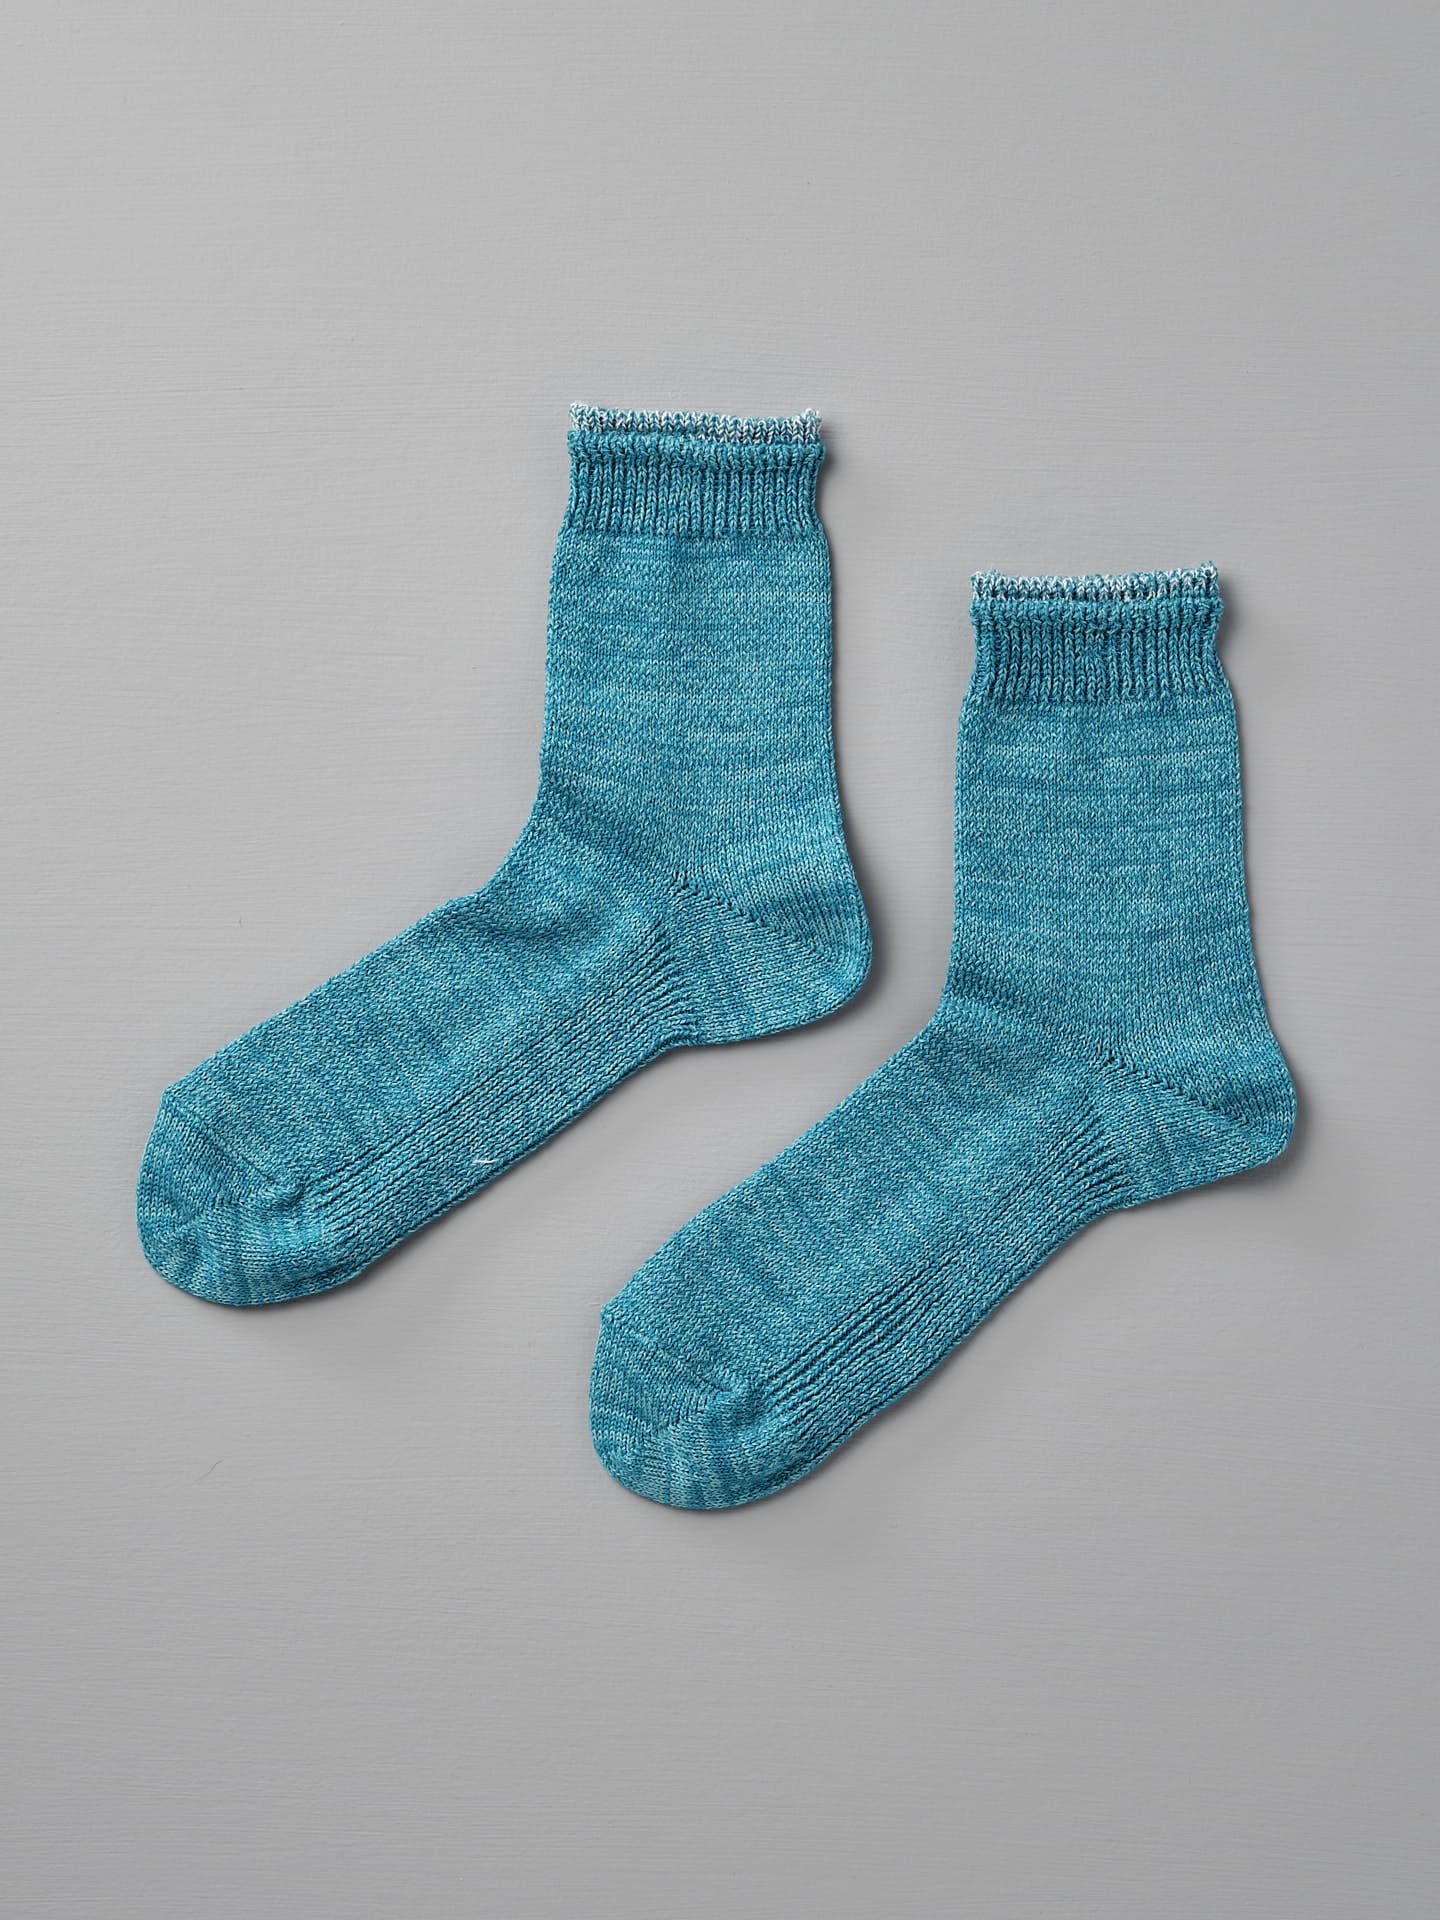 A pair of Mauna Kea Organic Top Switching Socks – Aqua, sized EUR 35—38, is laid flat on a light-gray surface.